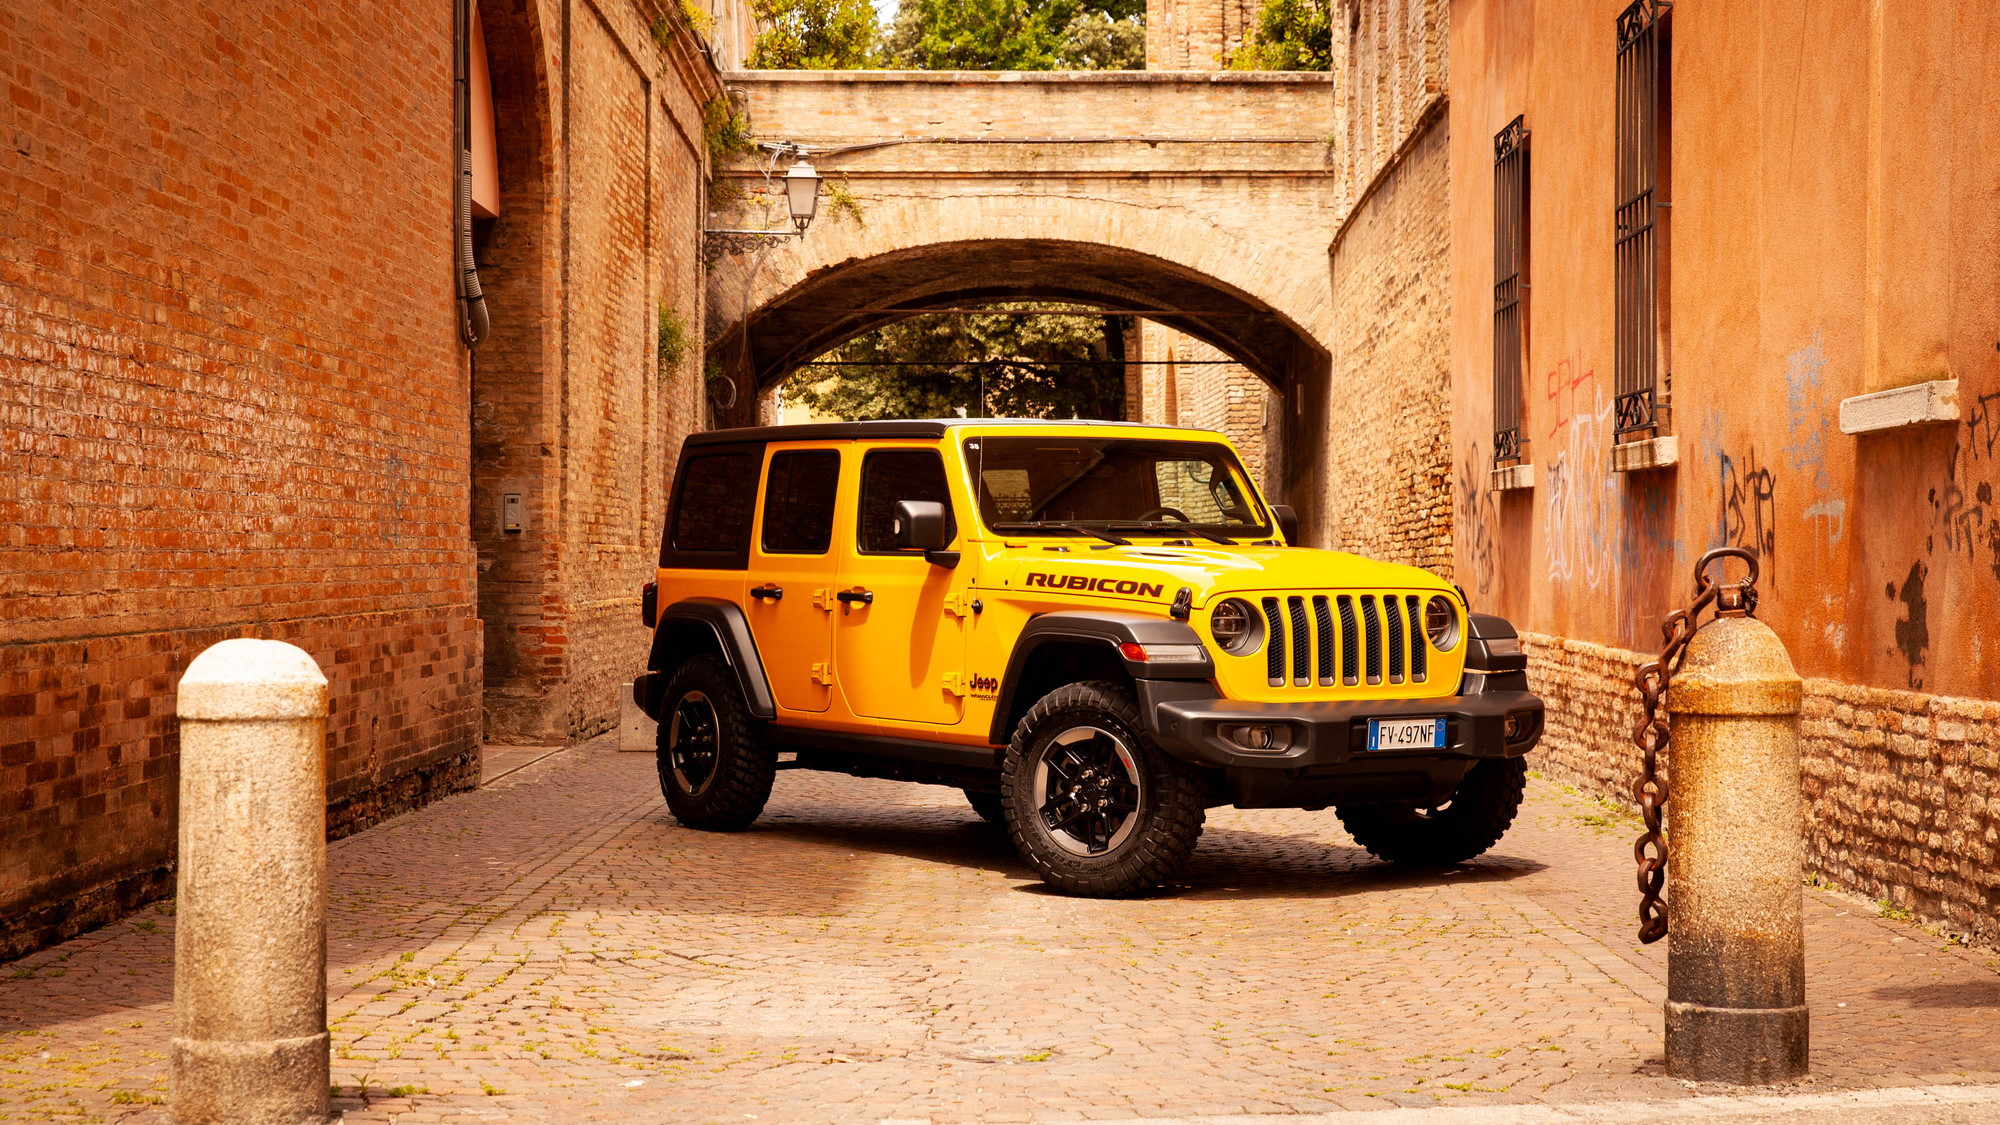 2019 Jeep Wrangler Rubicon in Ravenna, Italy (Crossing the Rubicone)